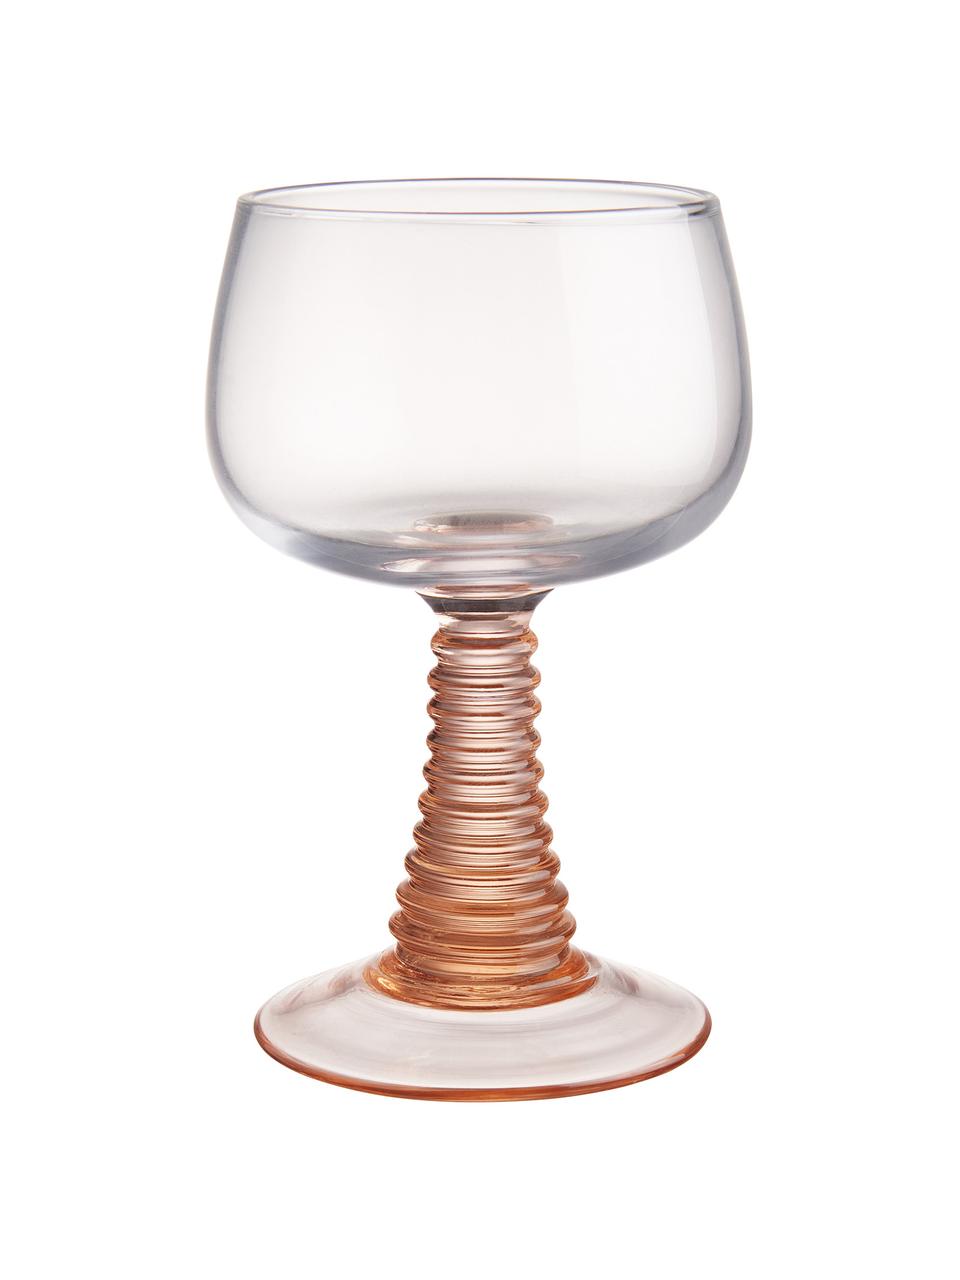 Bicchiere vino Constance 6 pz, Vetro, Trasparente, arancione pastello, Ø 8 x Alt. 13 cm, 230 ml